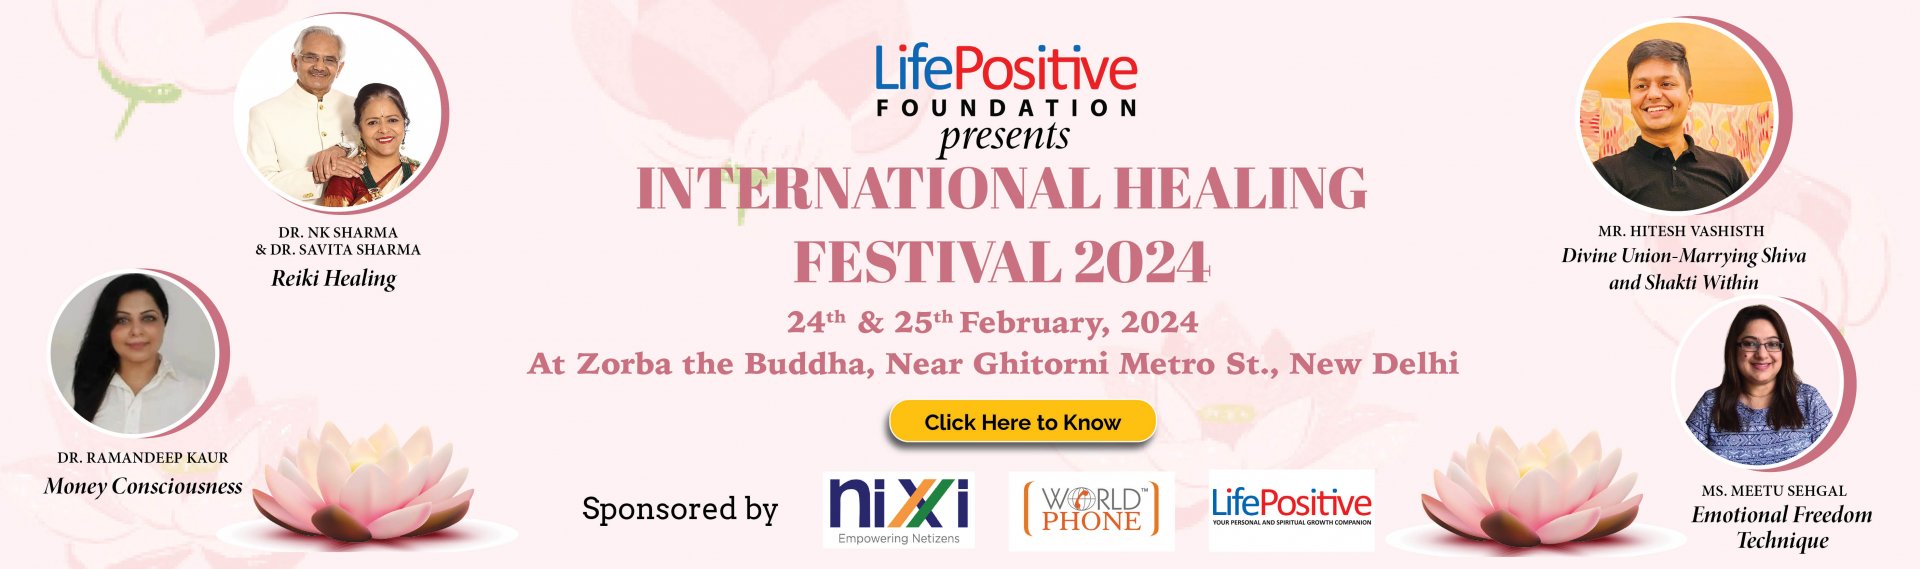 International Healing Festival 2024